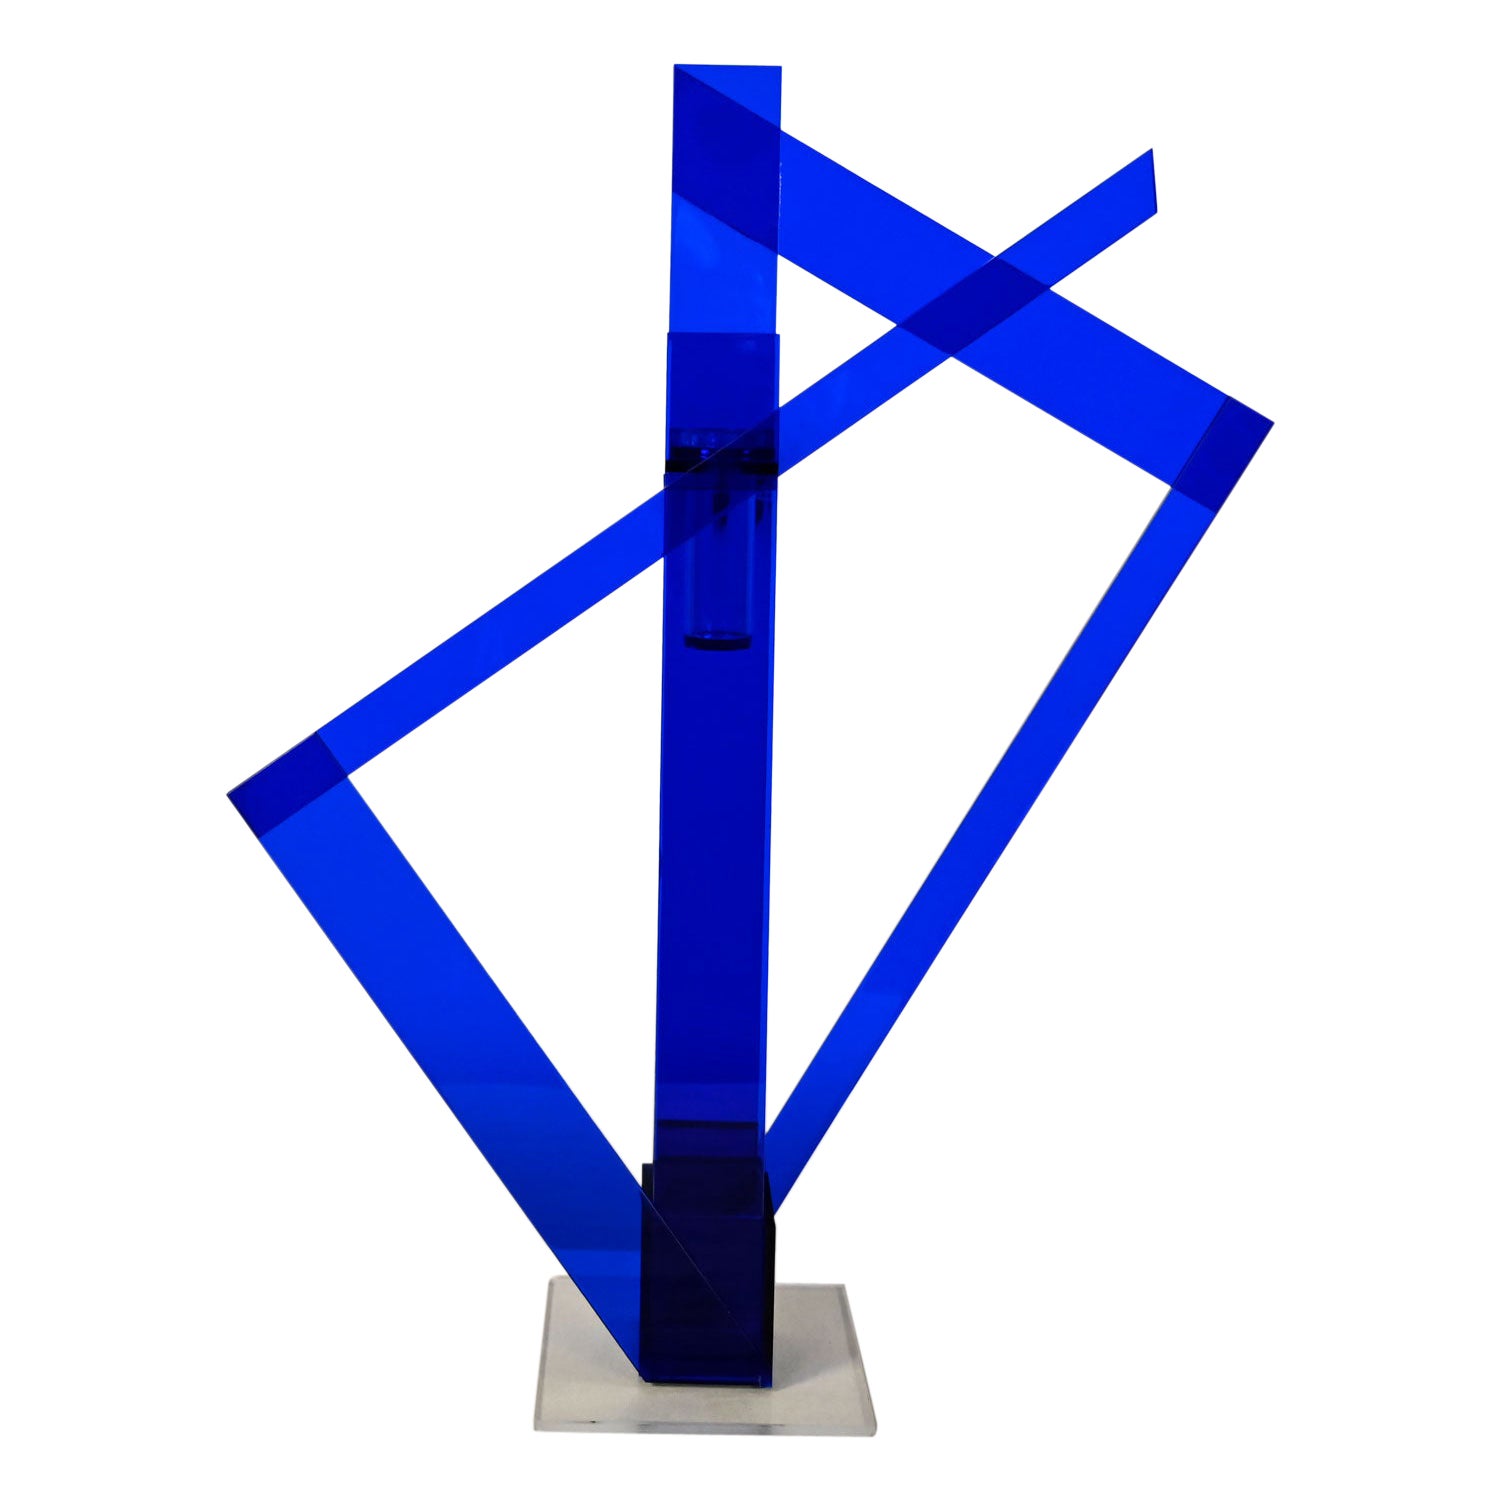 Abstrakte Vase oder Skulptur aus kobaltblauem Plexiglas, Postmoderne